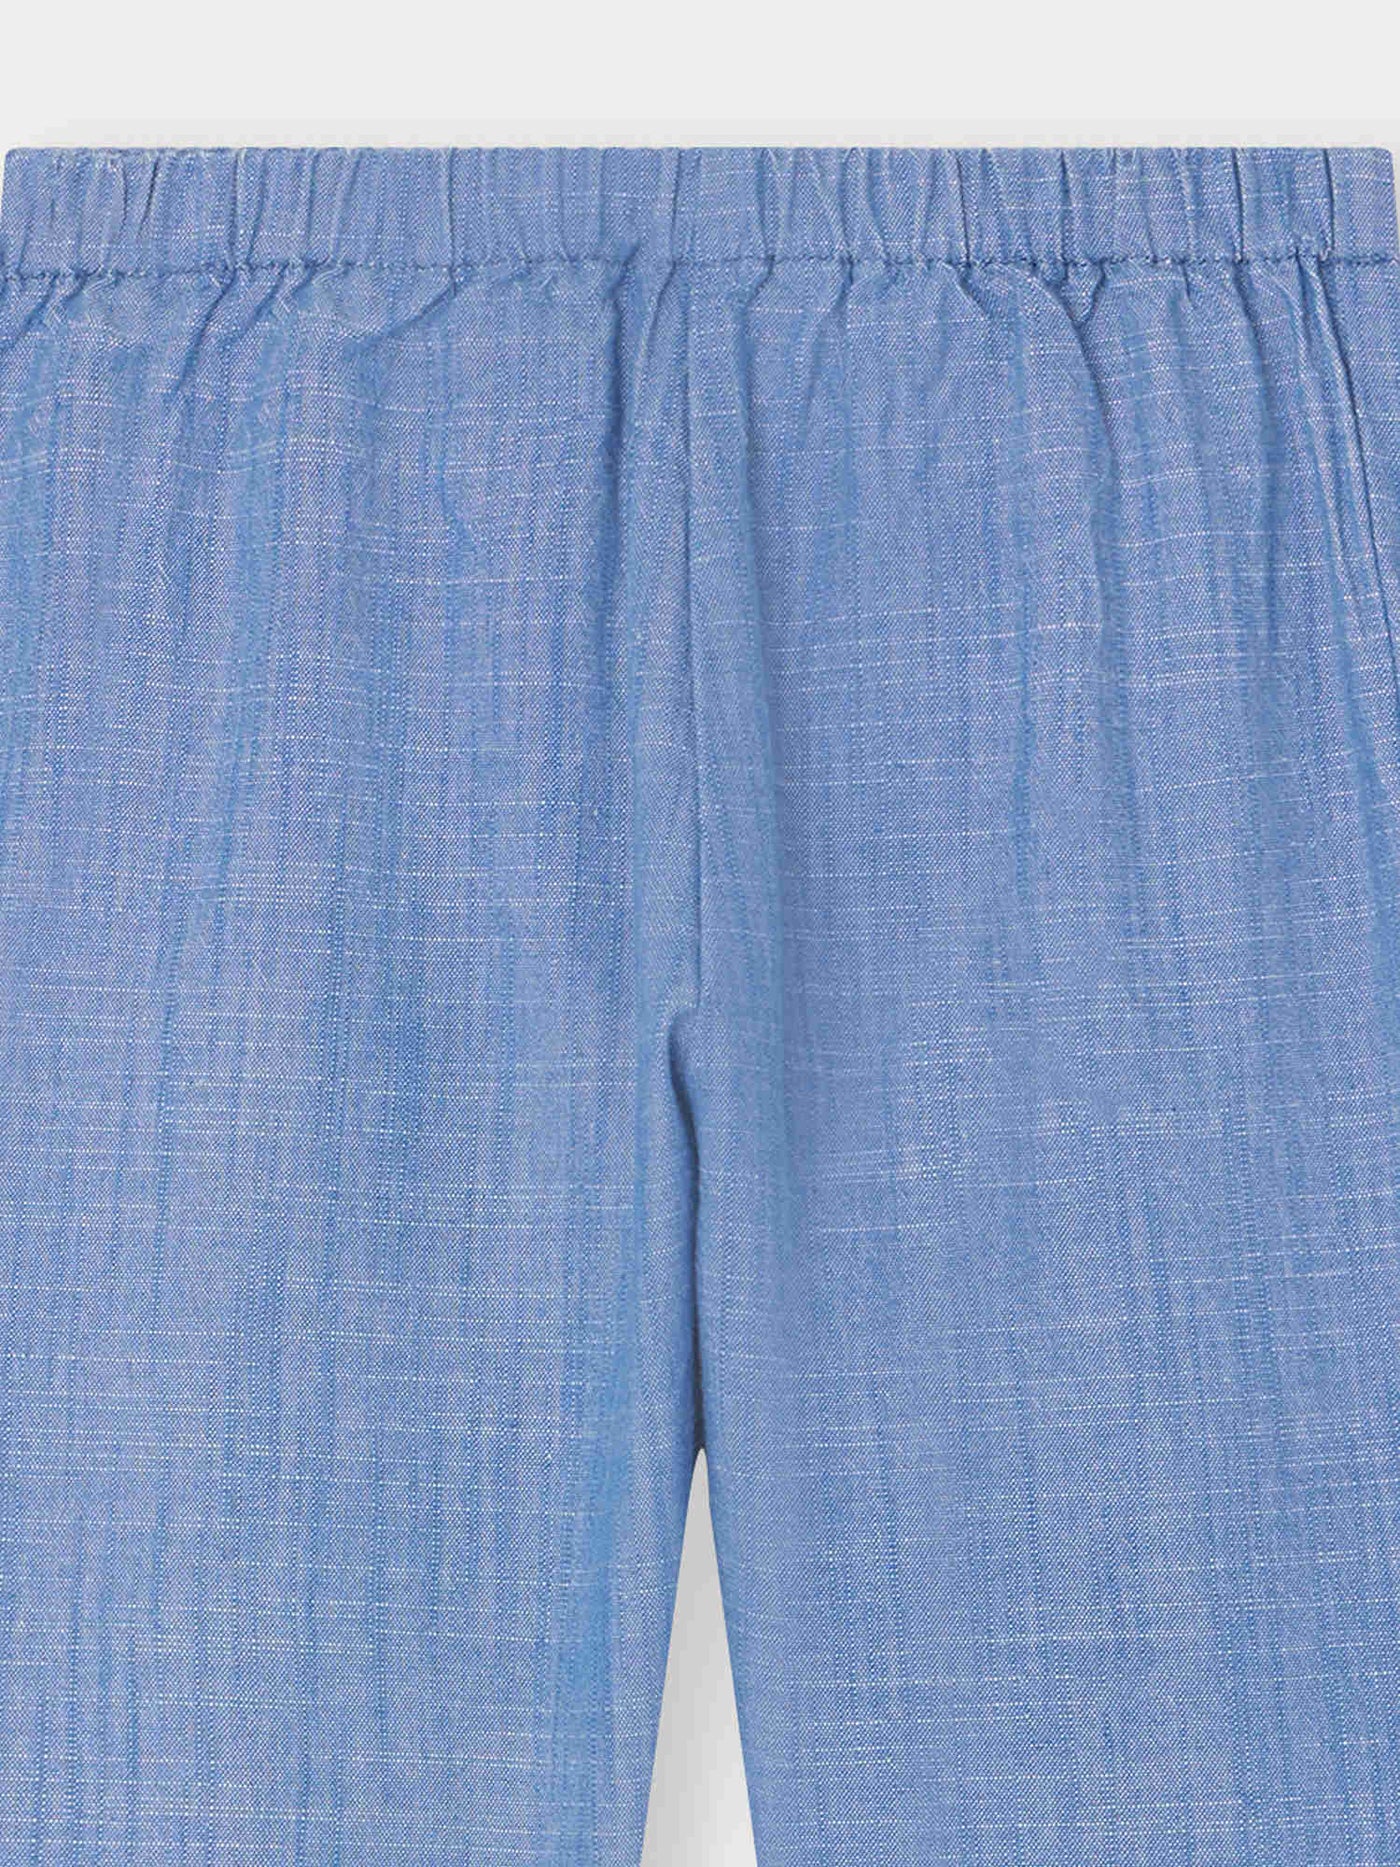 Bandy Pants blue